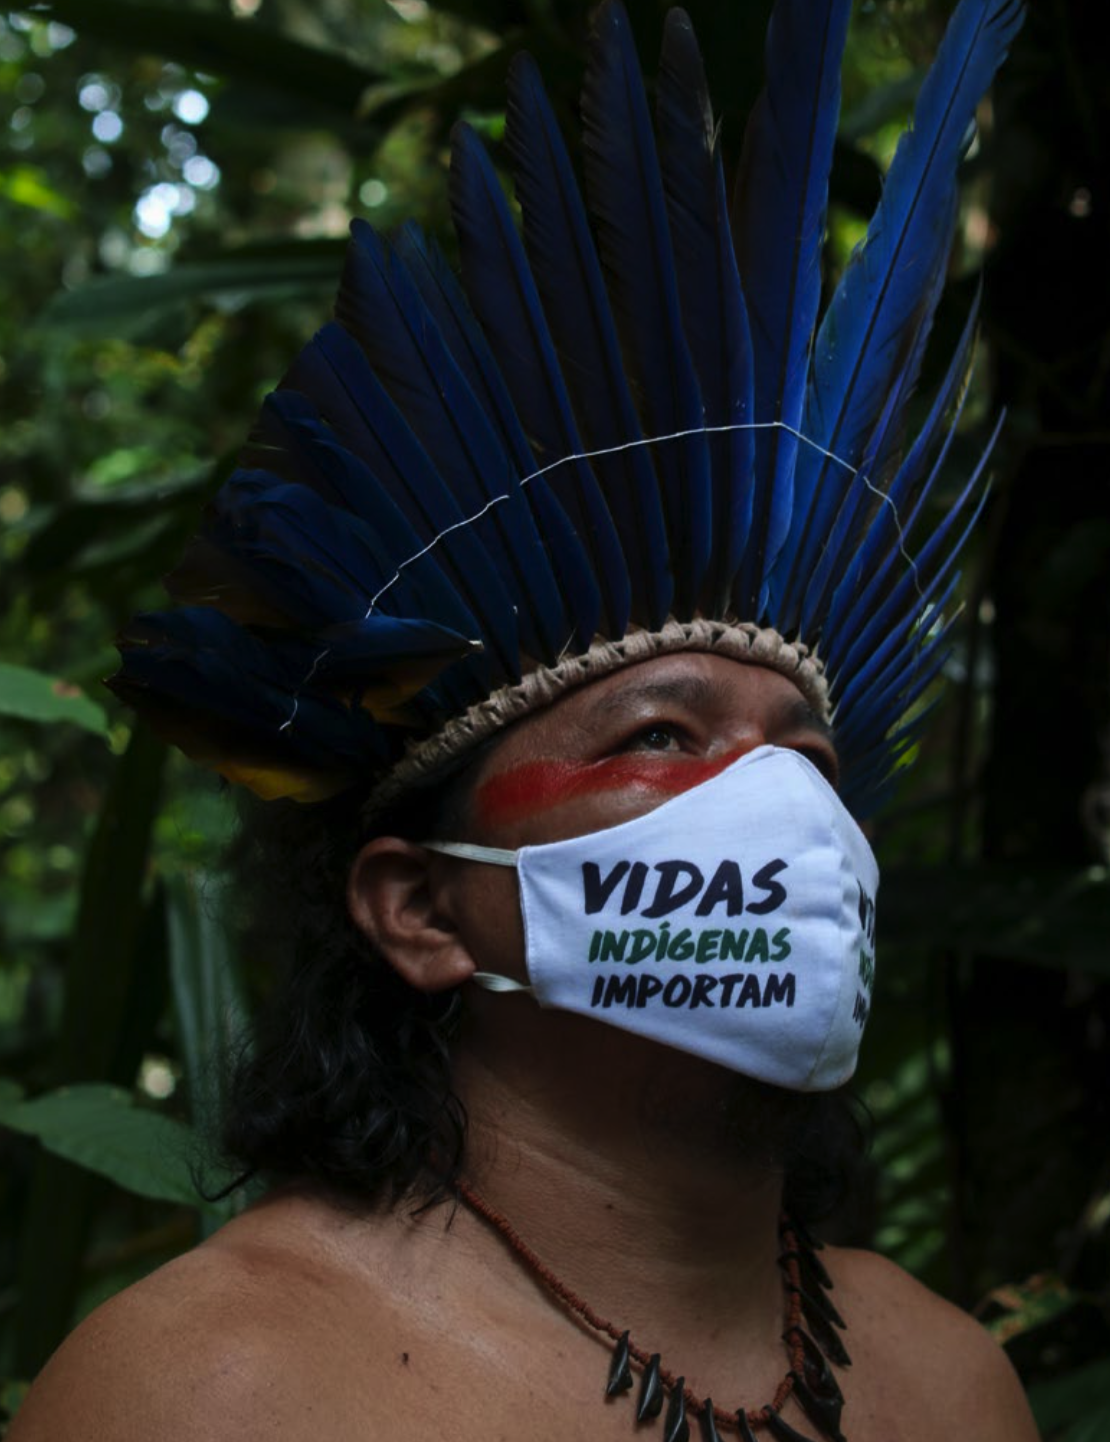 Amazonie: « Les vies indigènes comptent » Photo Ricardo Oliveira/AFP via Getty Images)